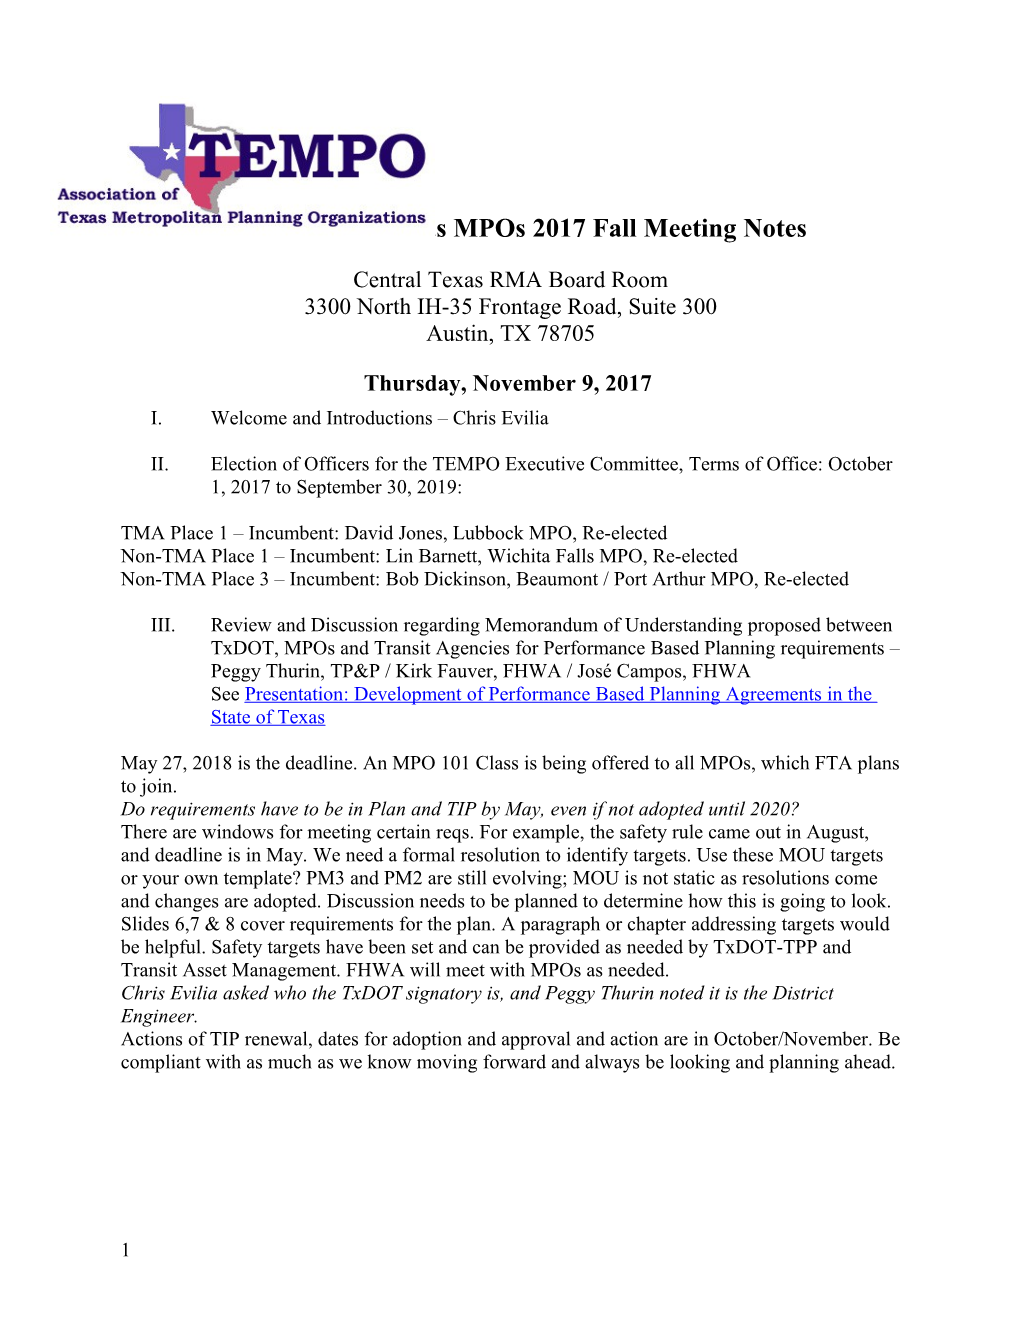 Association of Texas Mpos2017 Fallmeetingnotes